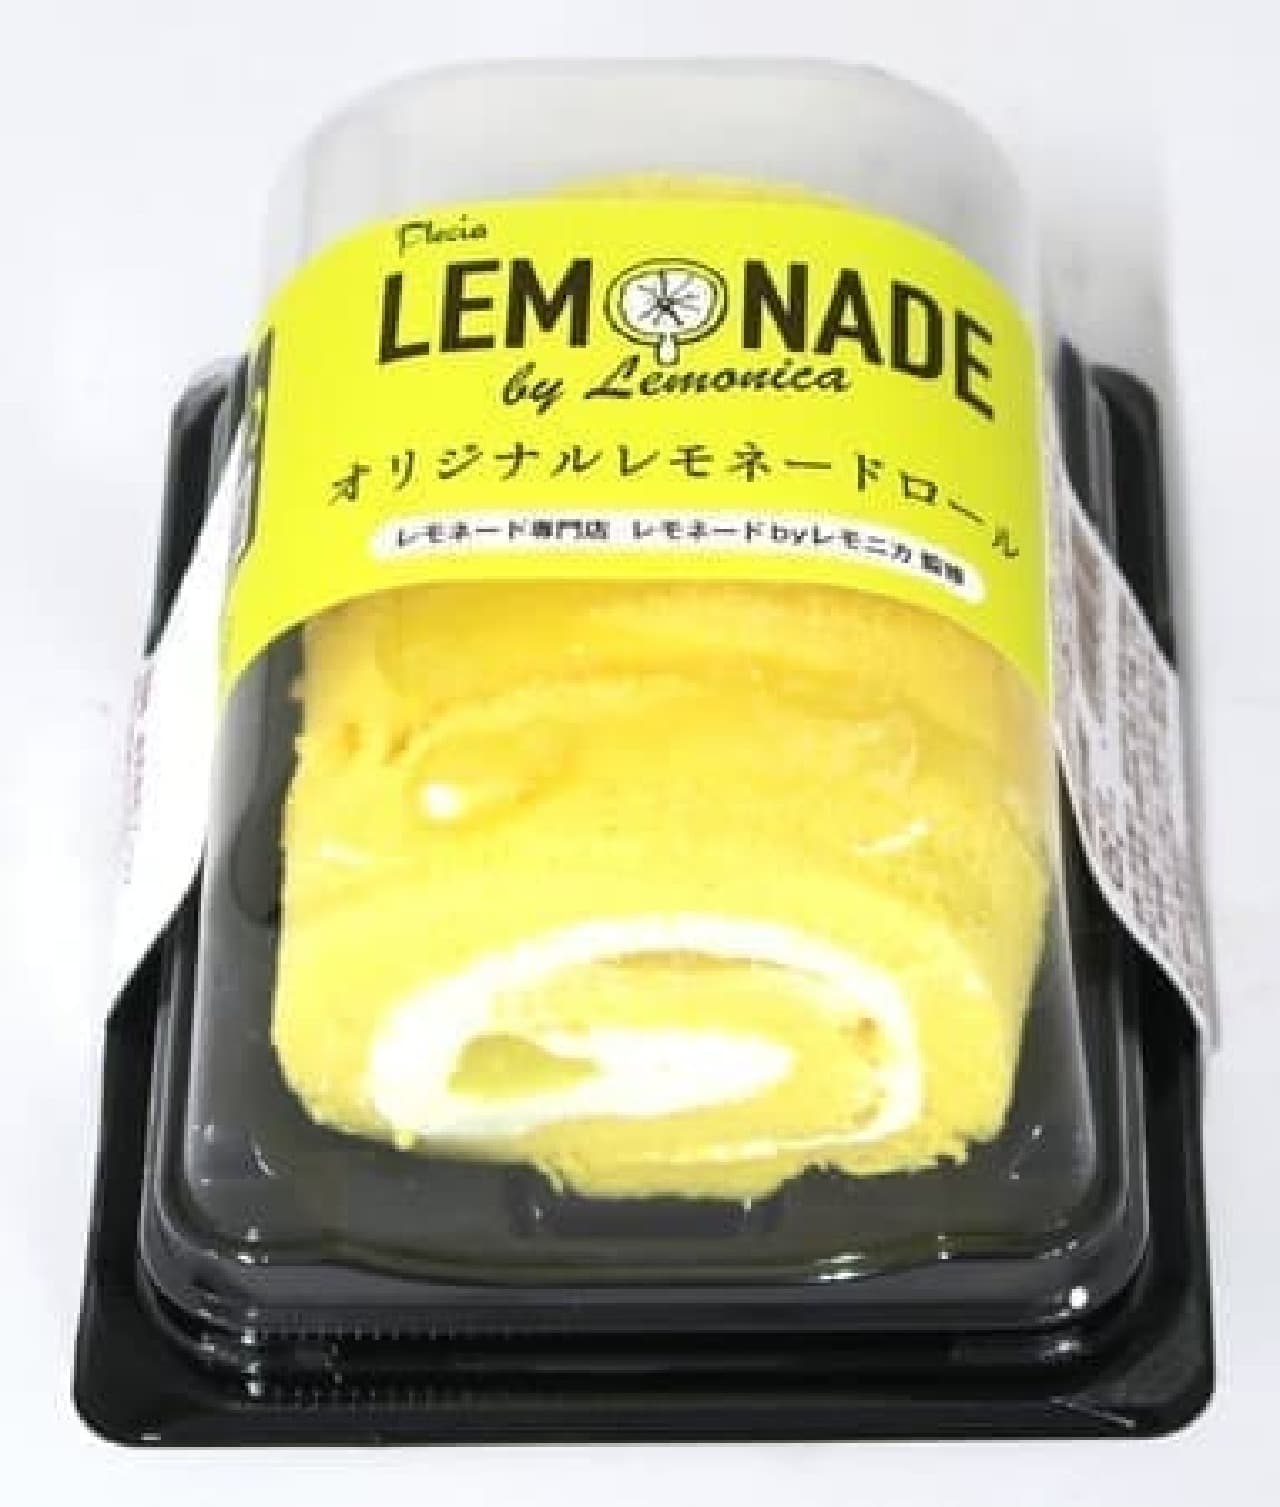 "Original Lemonade Roll" supervised by Lemonade by Lemonica